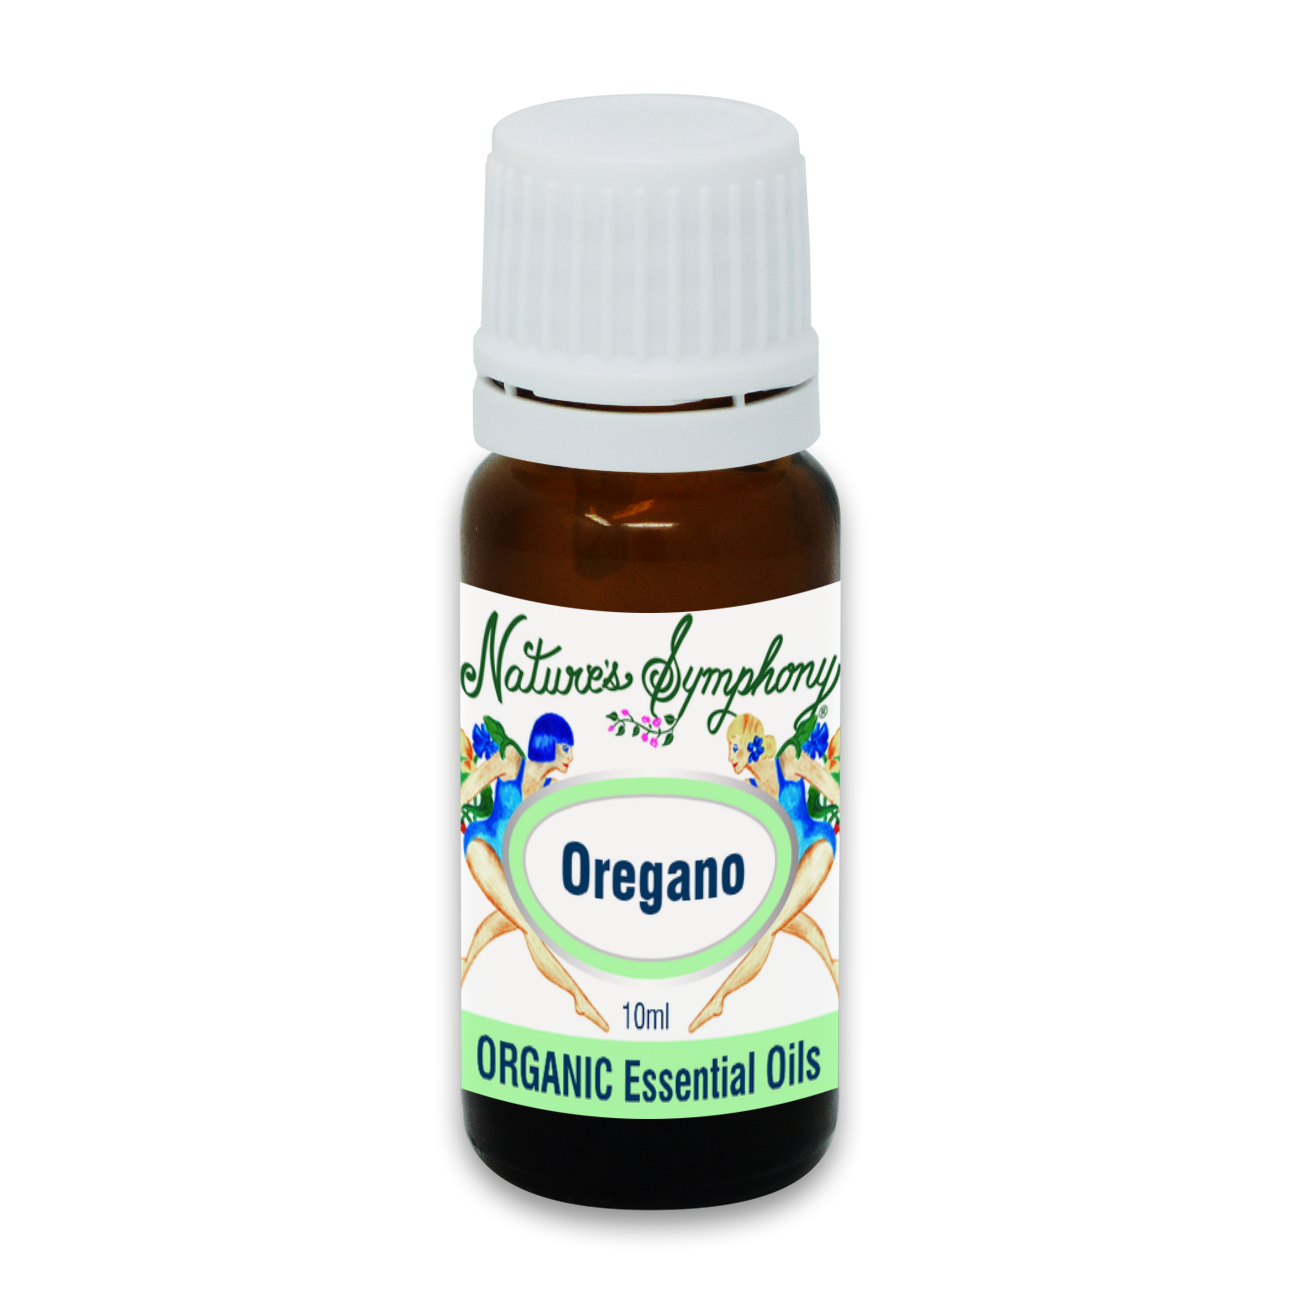 Oregano, Organic/Wildcrafted oil - 10ml